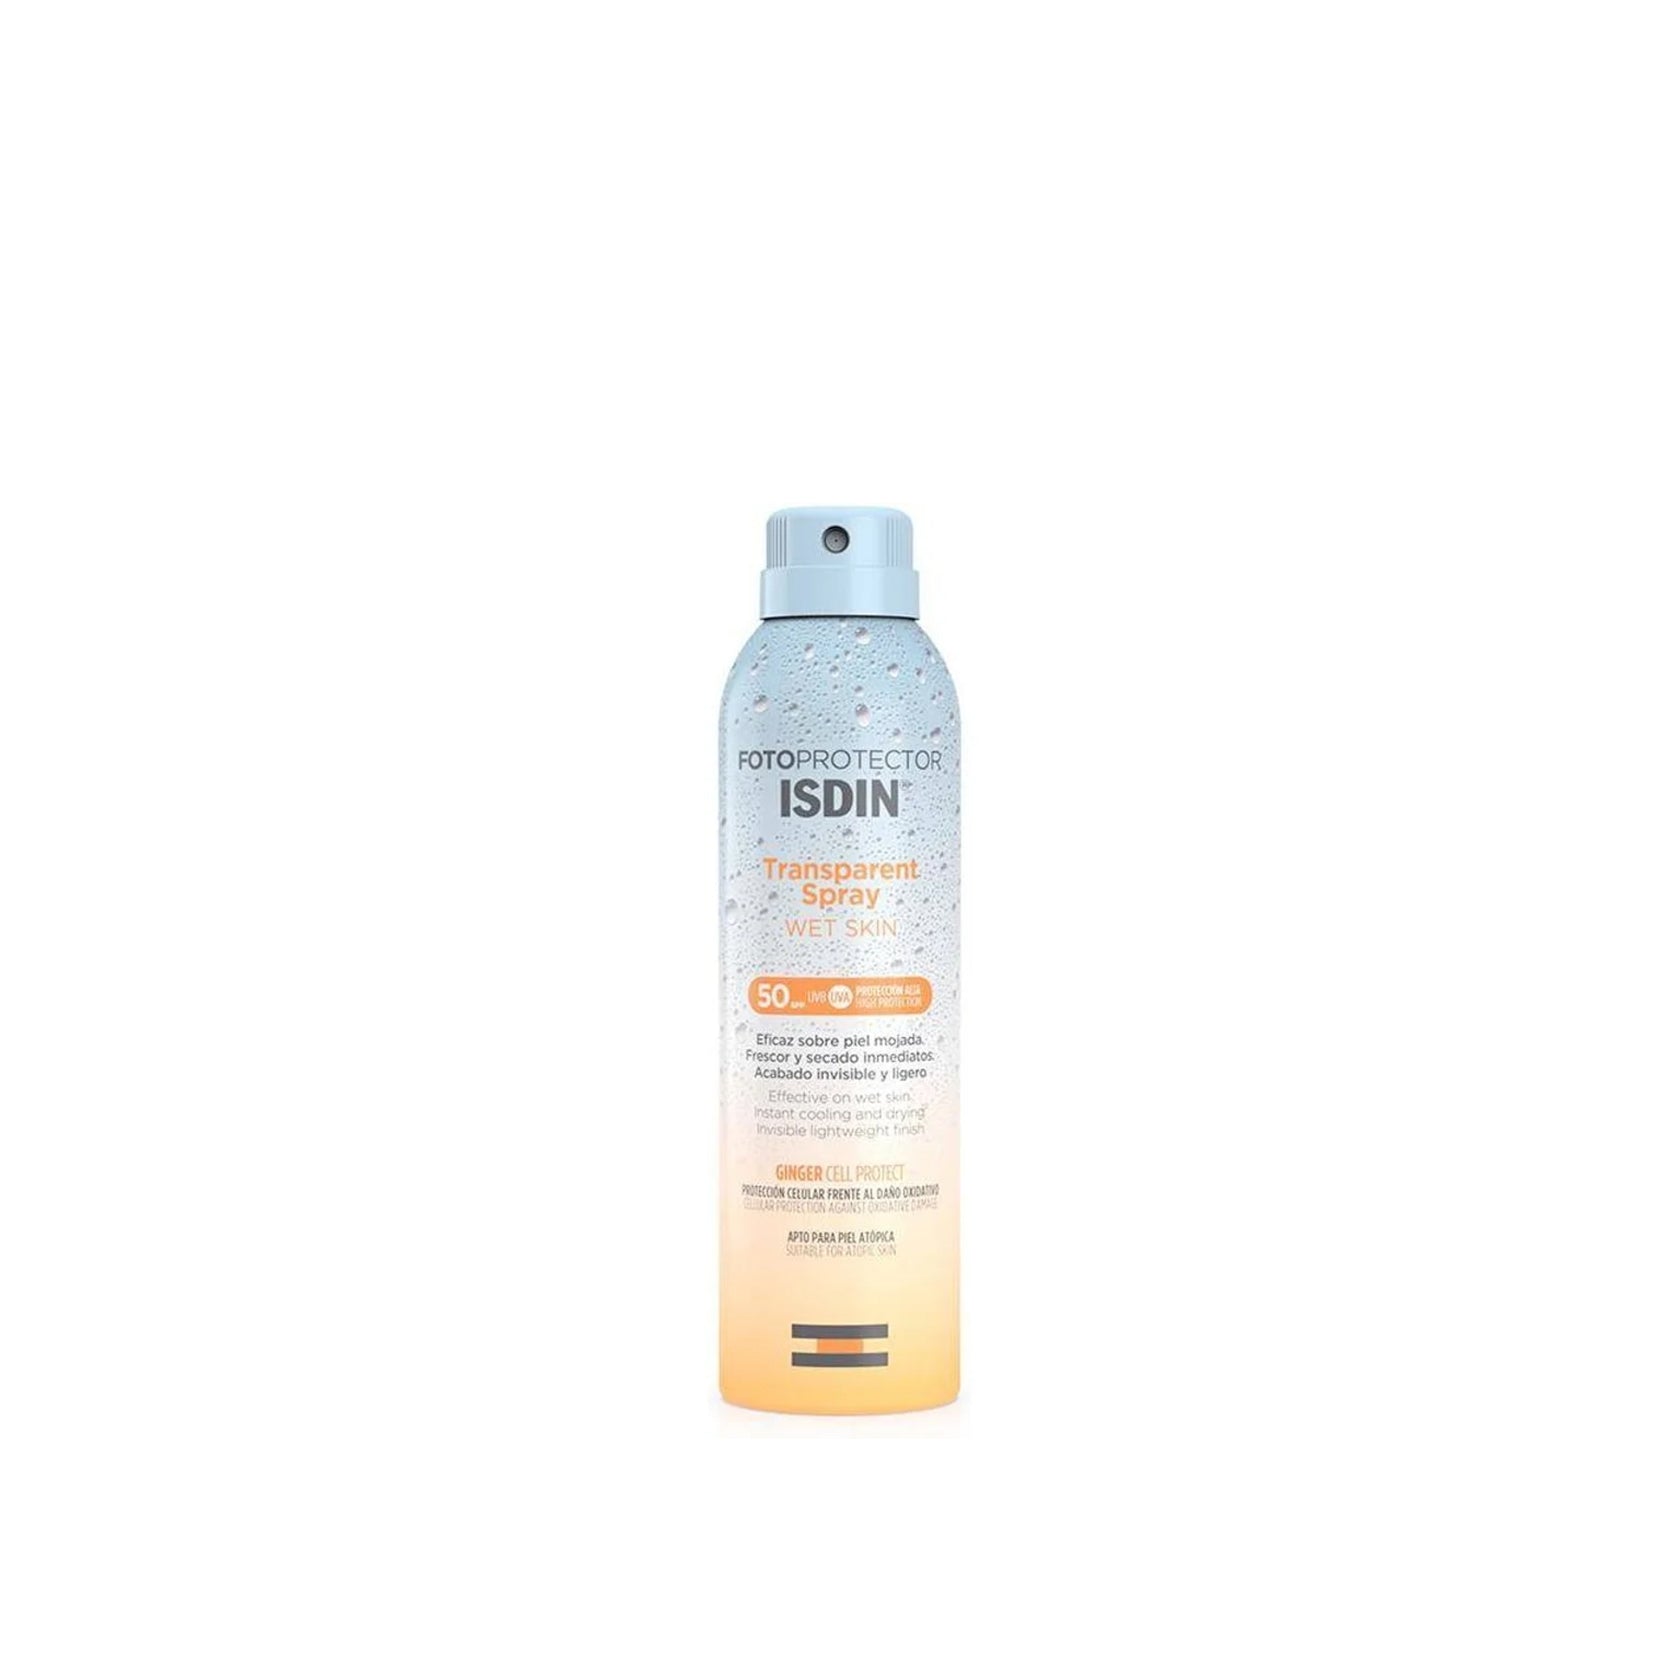 ISDIN Fotoprotector Lotion Spray SPF50 250ml